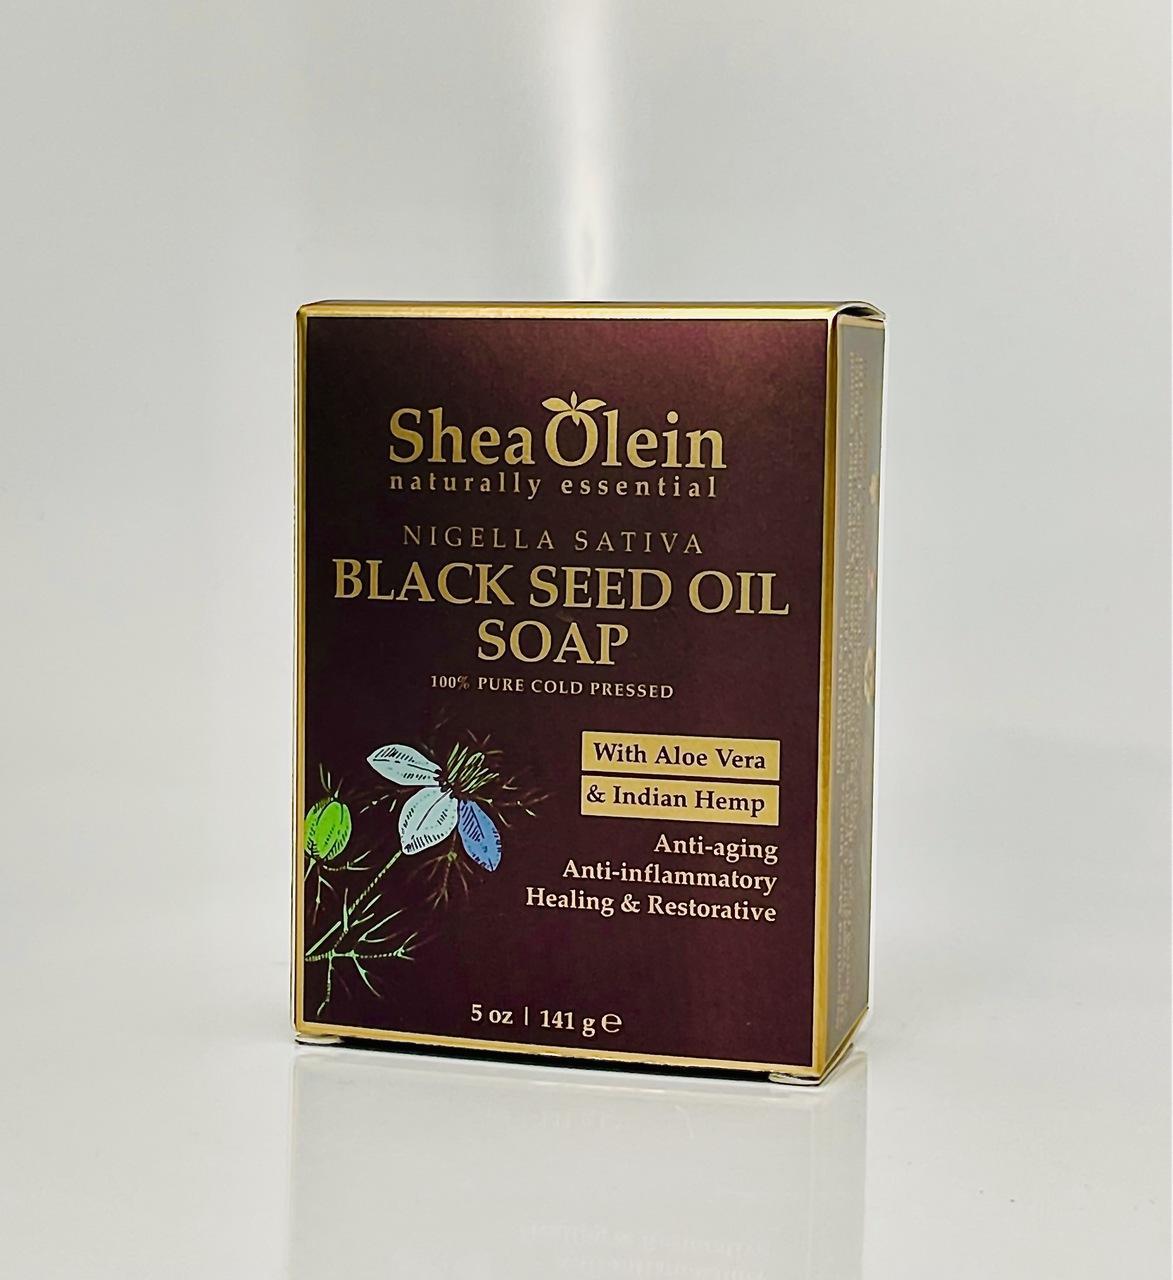 Nigella Sativa Black Seed Oil Soap 5oz